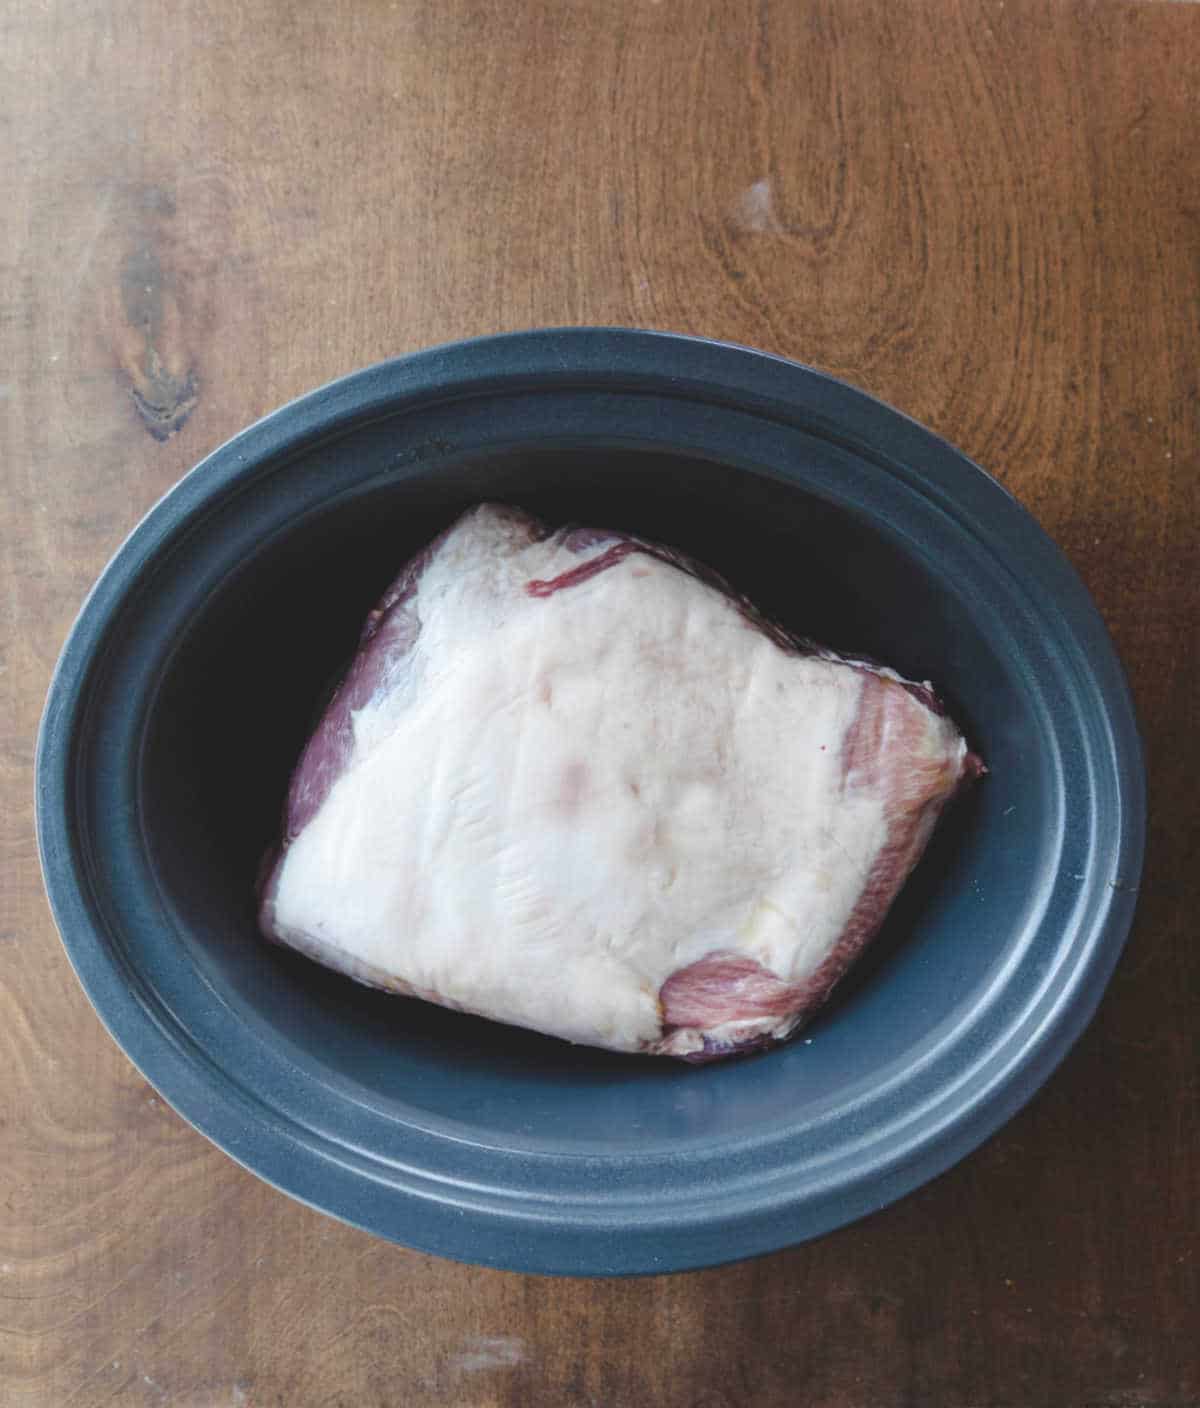 A pork roast in a slow cooker insert. 